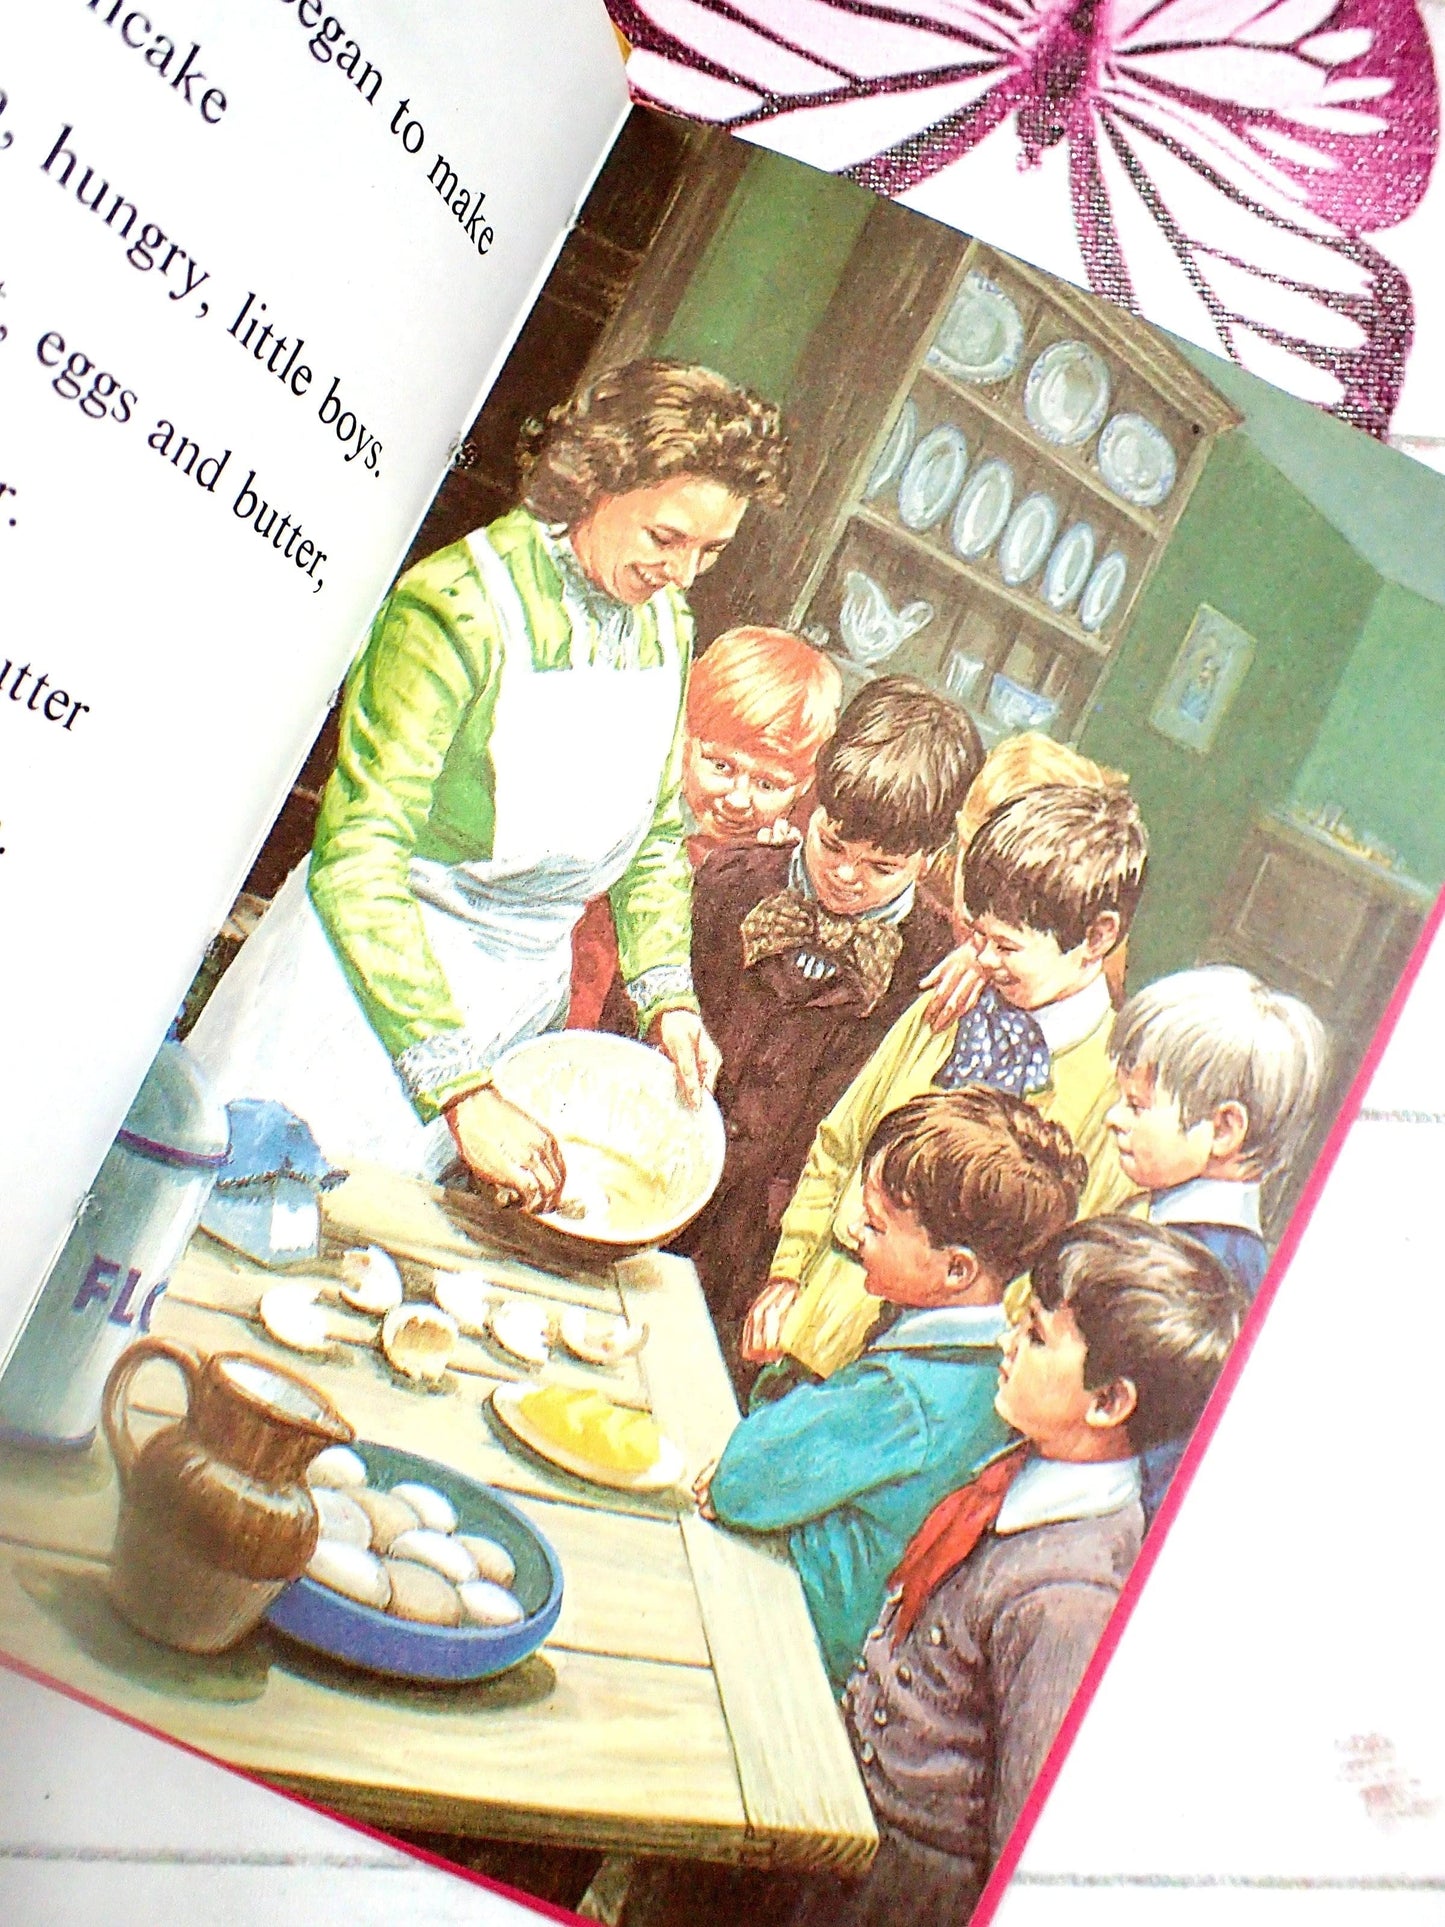 Woman baking pancake with young boys watching.